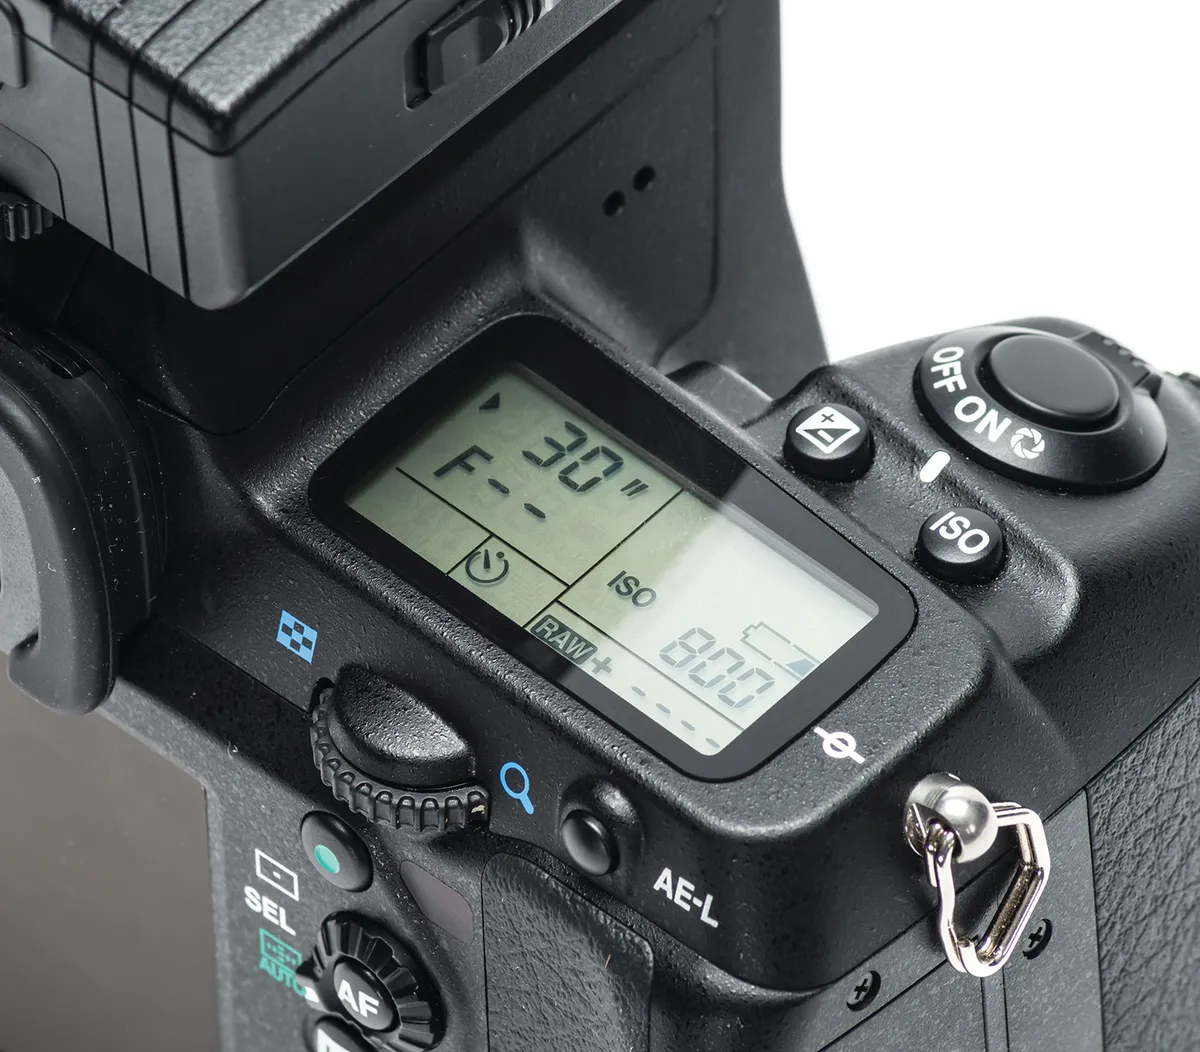 Pentax Astrotracer DSLR camera kit review